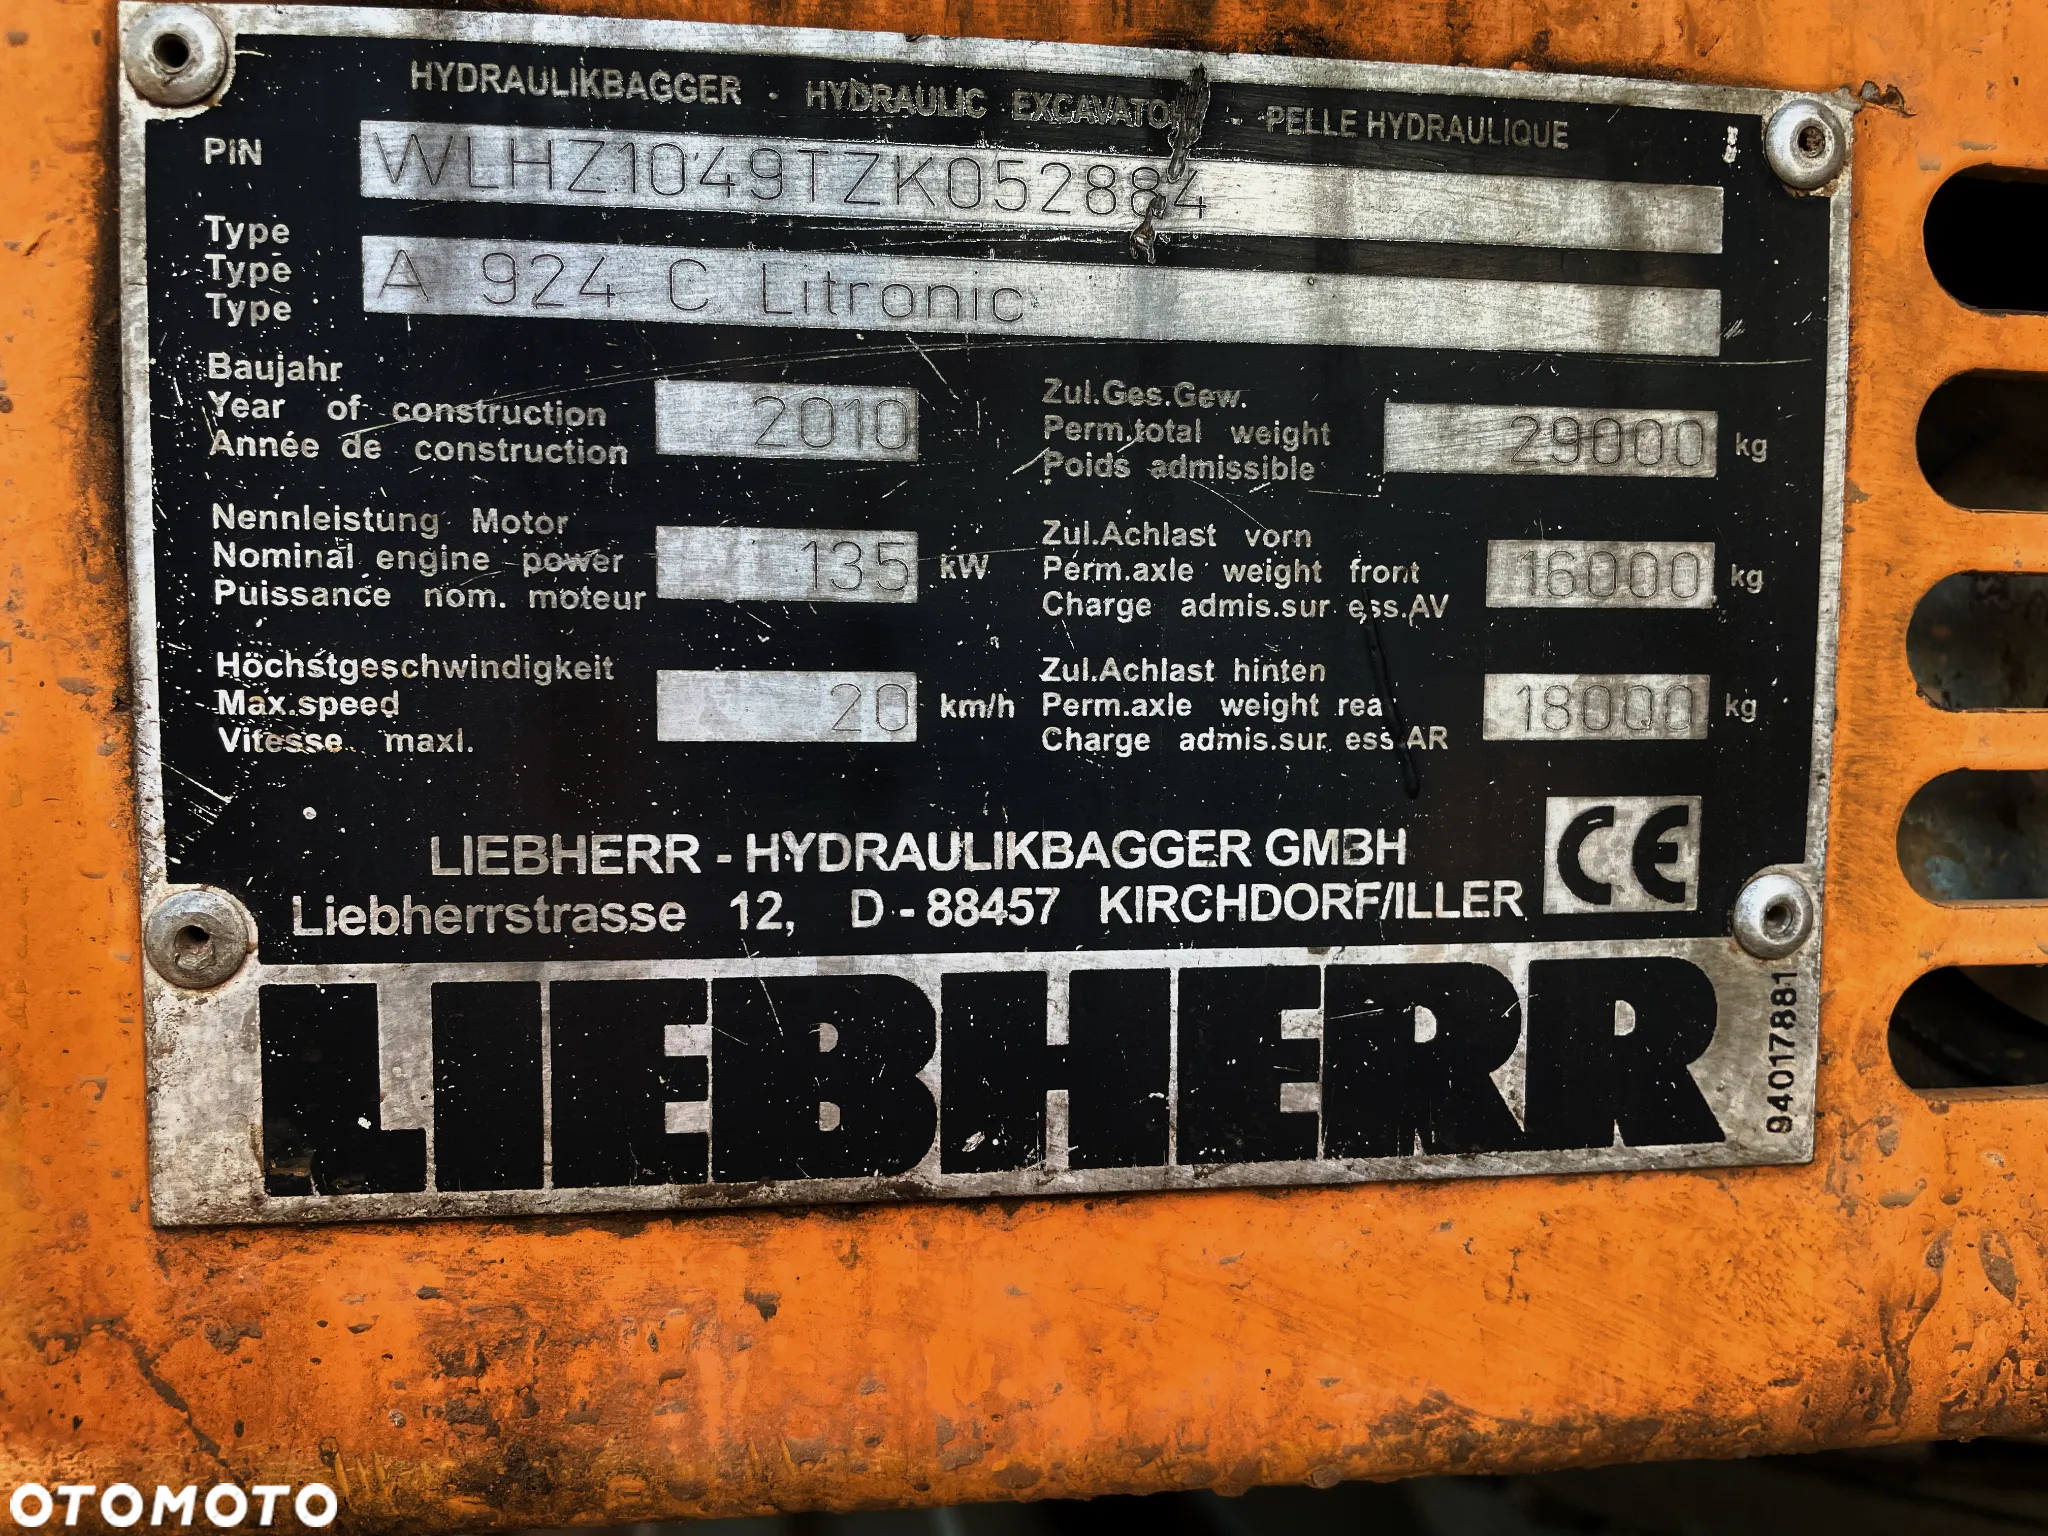 Liebherr A924 C LITRONIC - 7